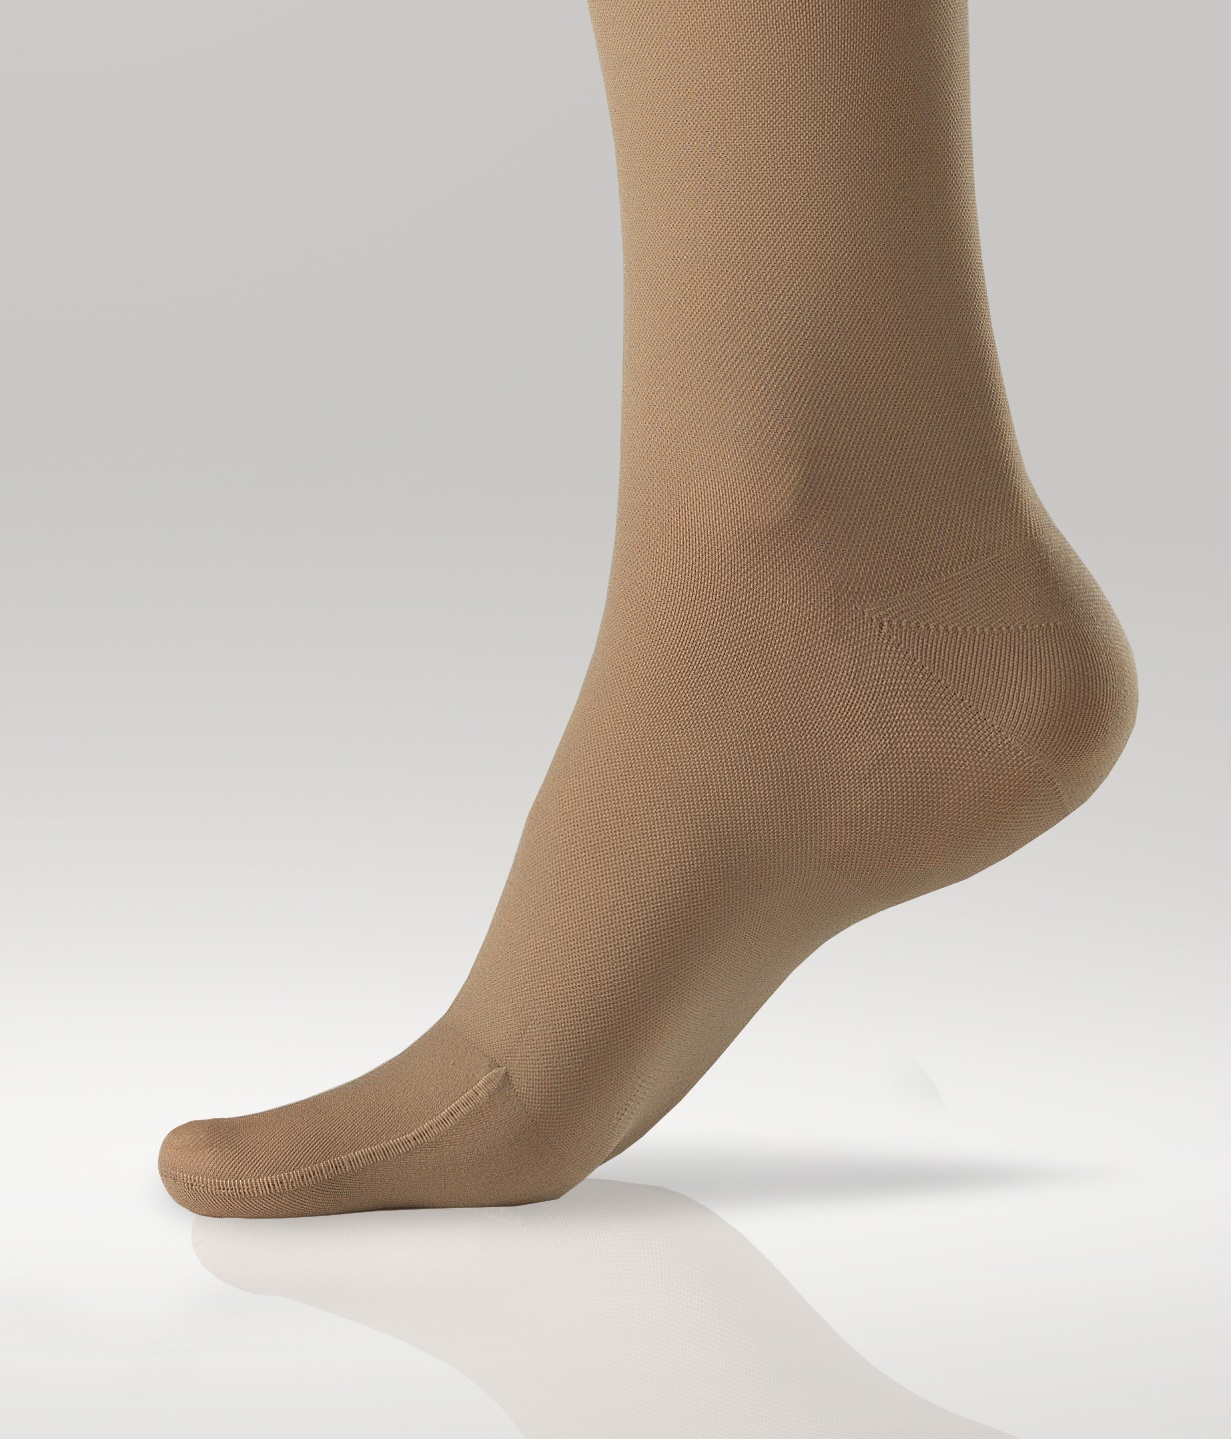 Memory medical knee-high stockings